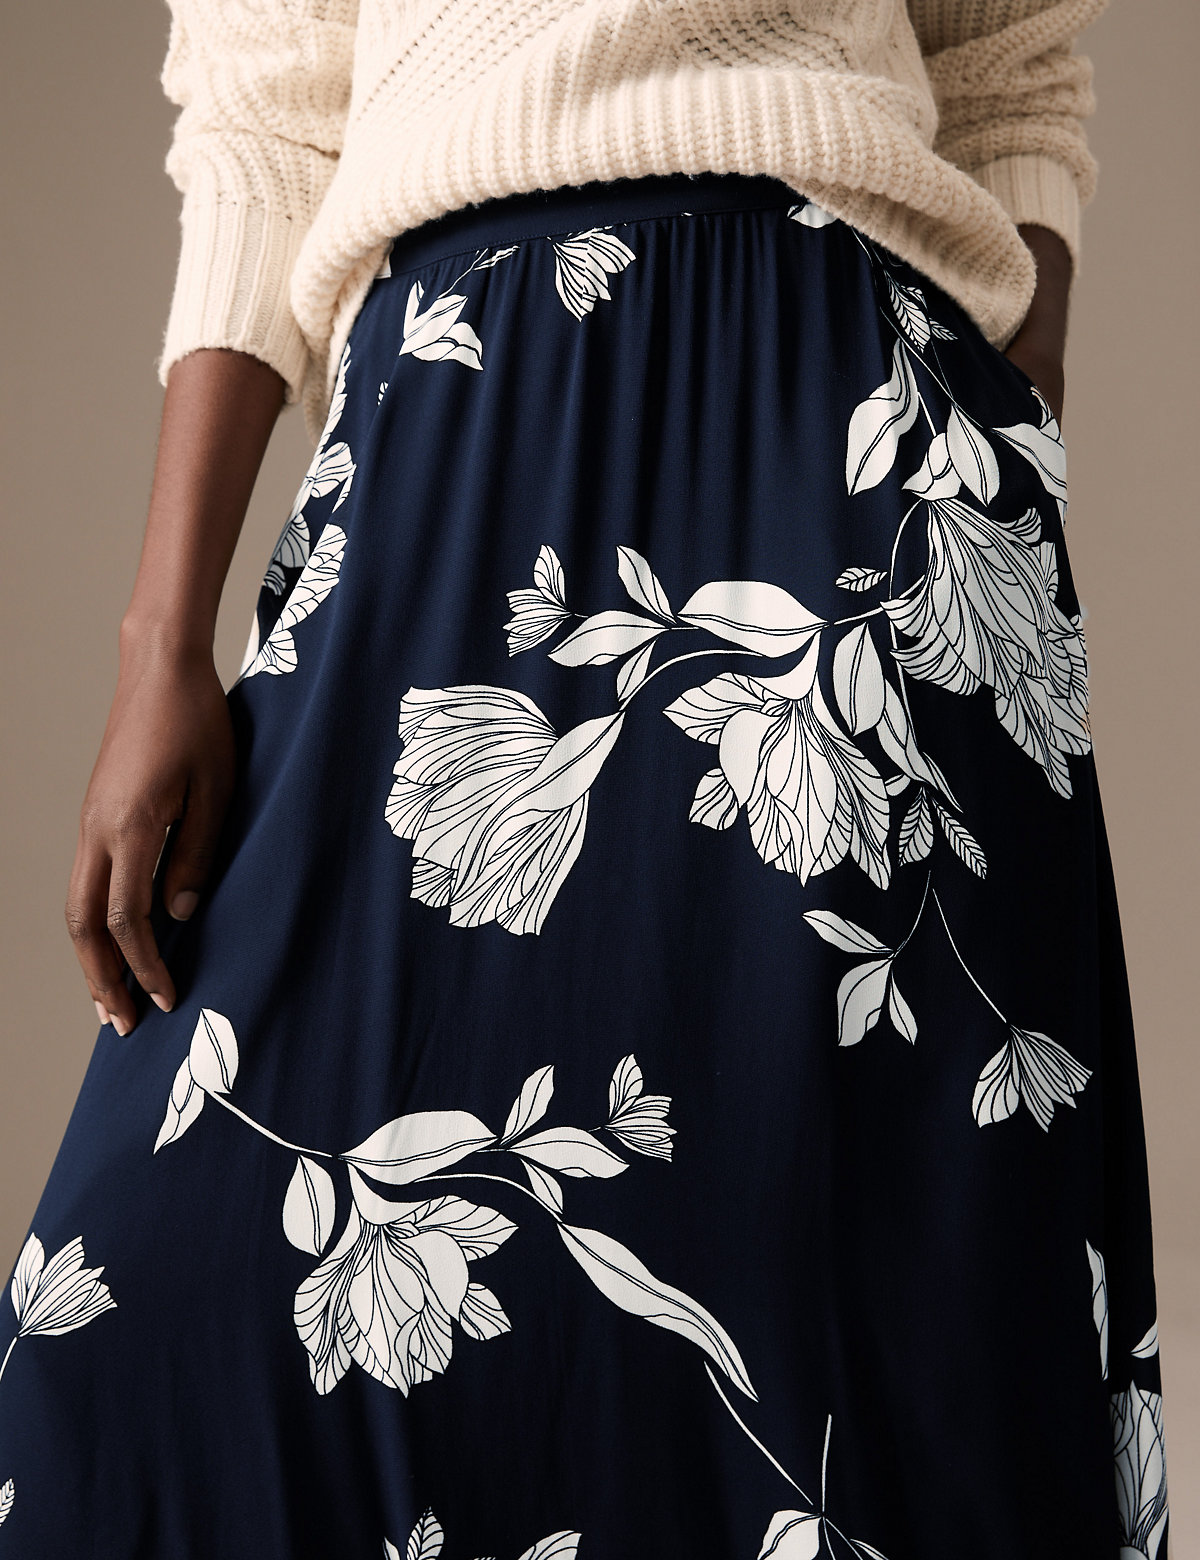 Floral Midaxi A-Line Skirt